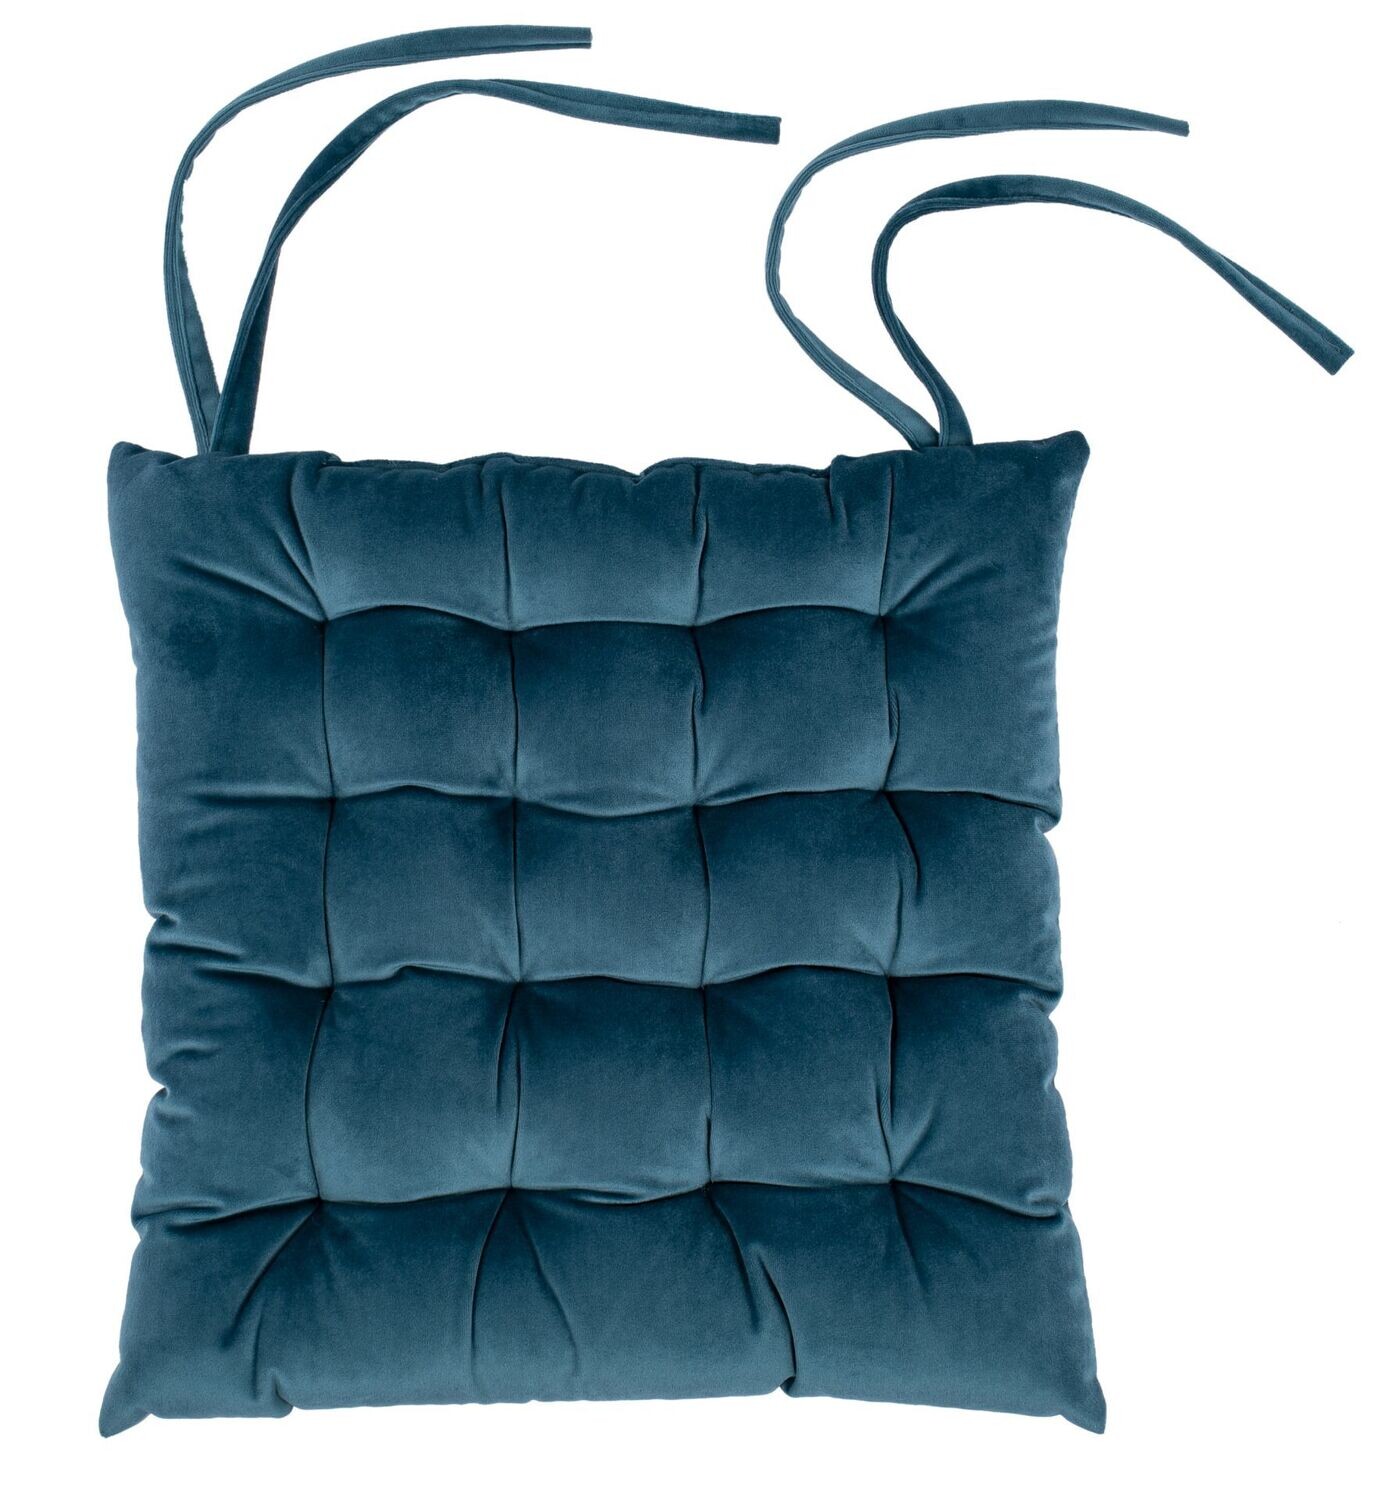 Cuscino per sedia Trapuntato in Velluto 37x37 cm Blu - Tirolix